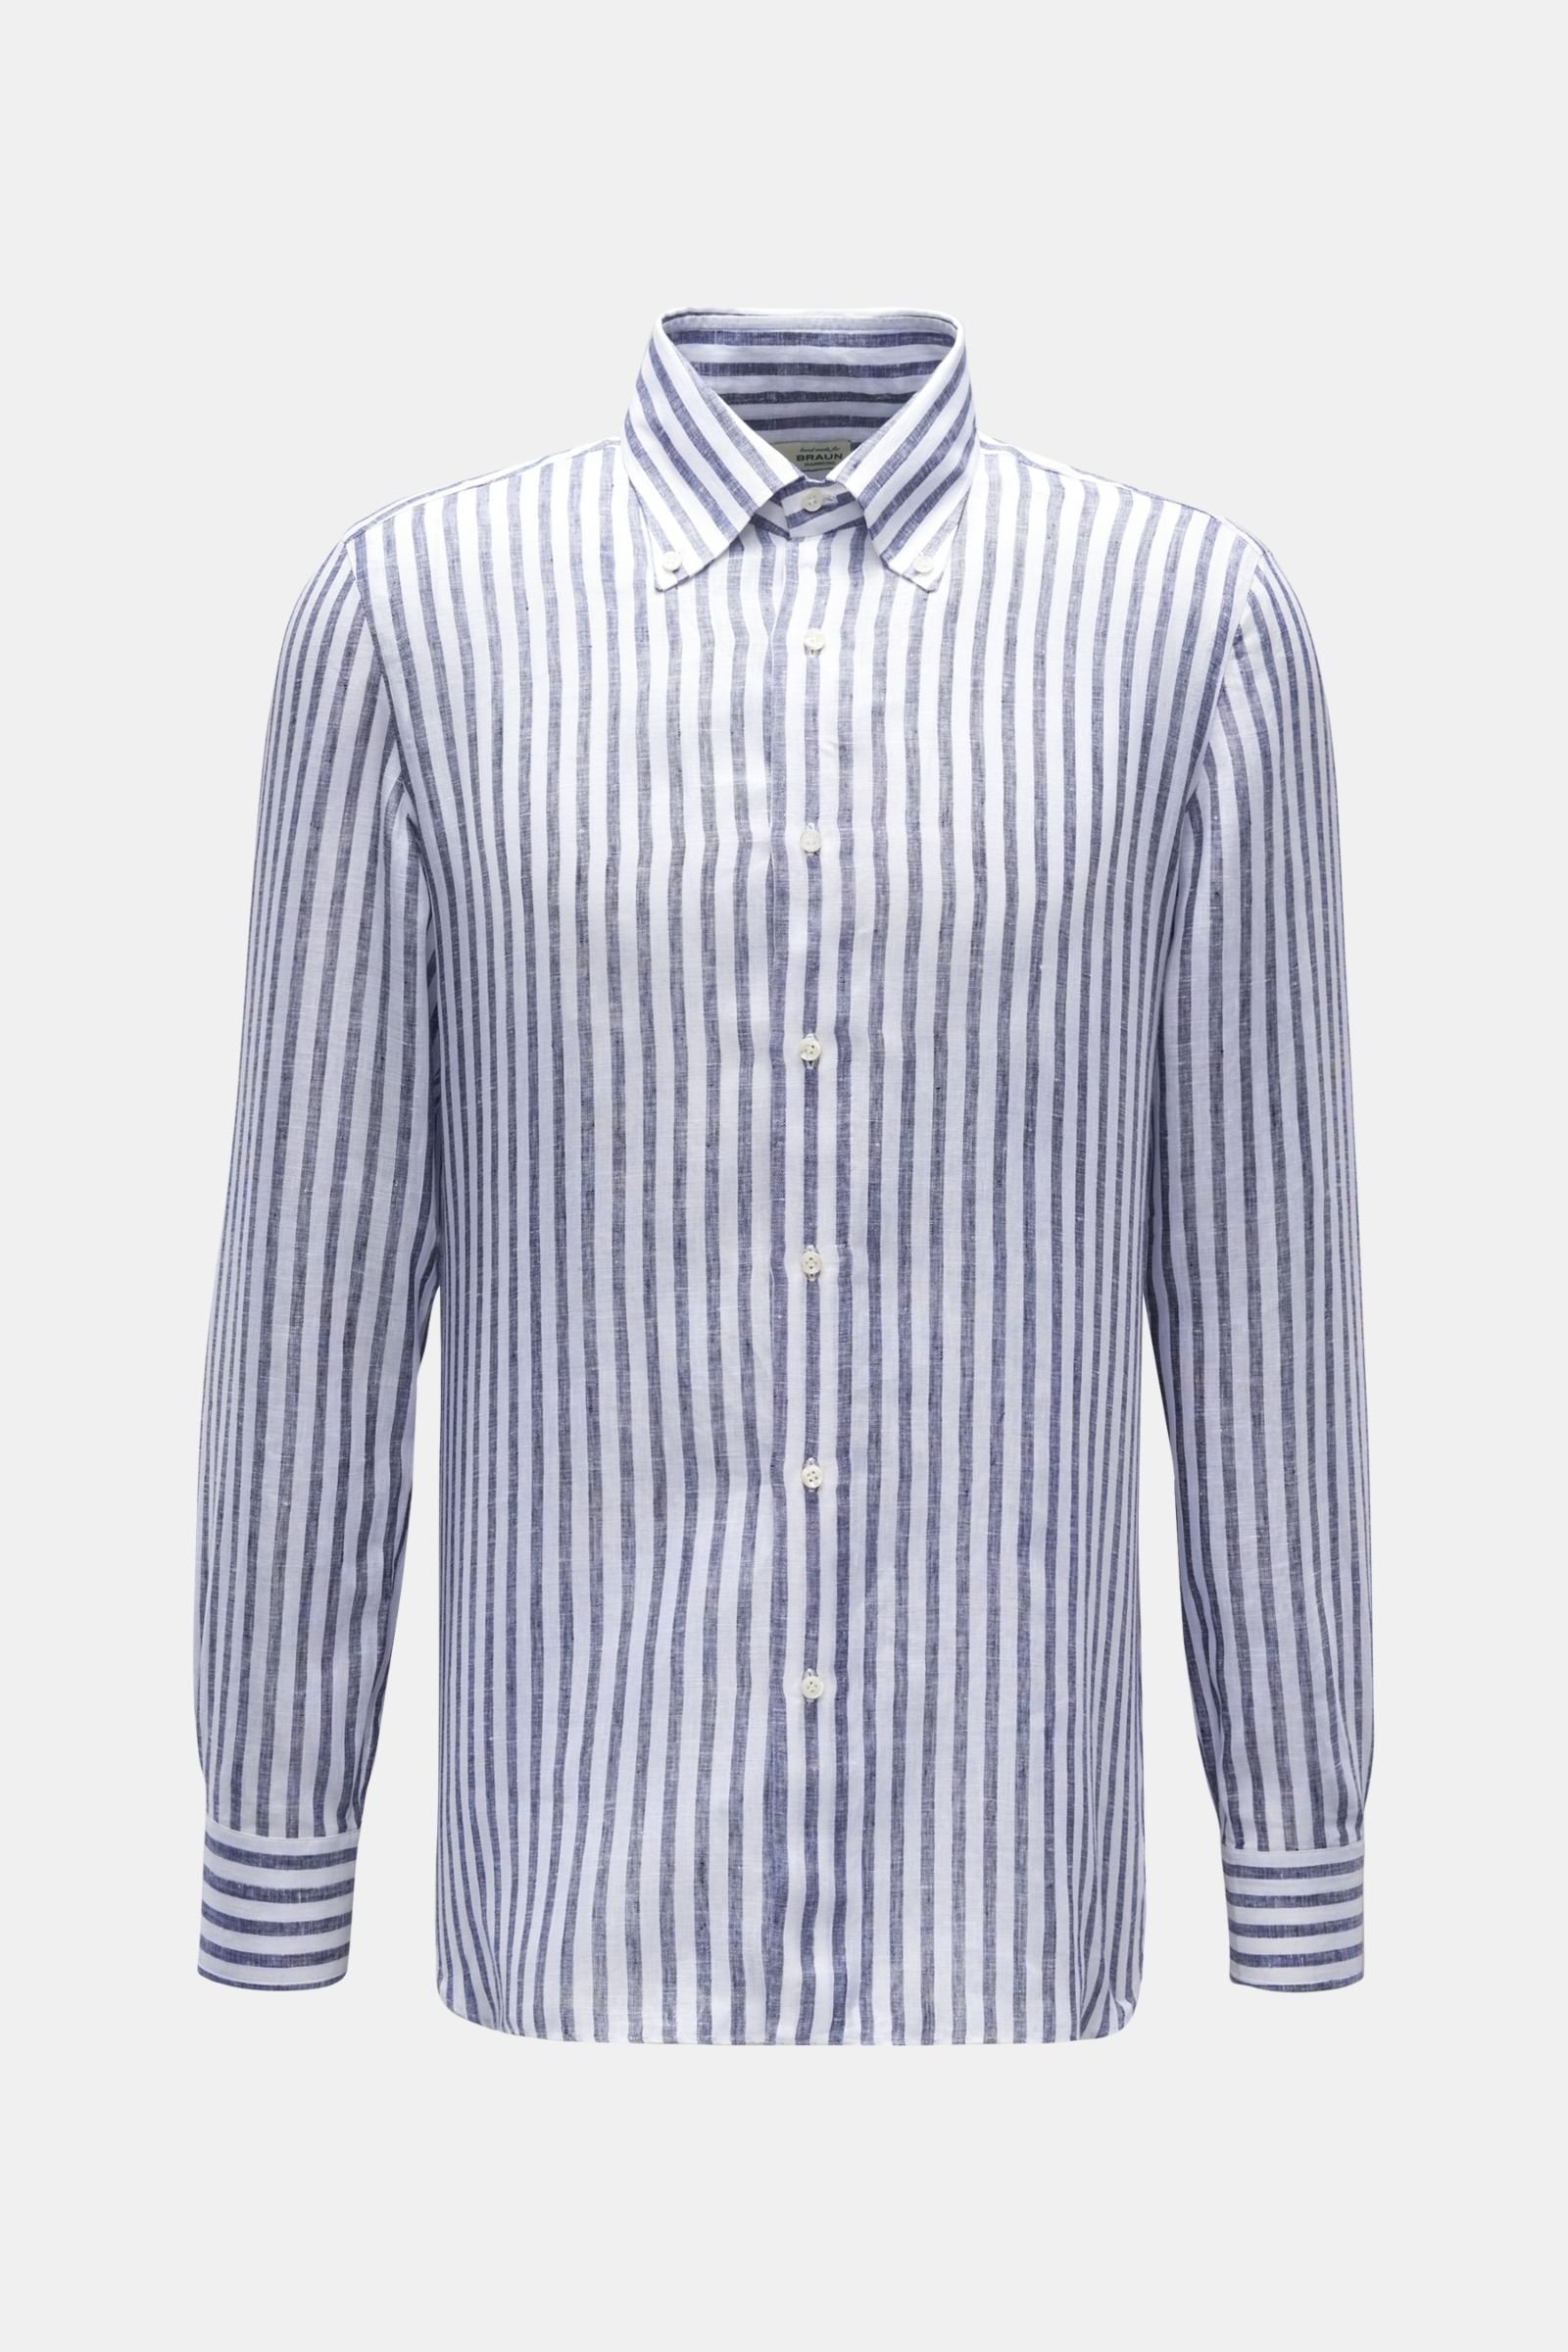 Linen shirt 'Gable' button-down collar grey-blue/white striped